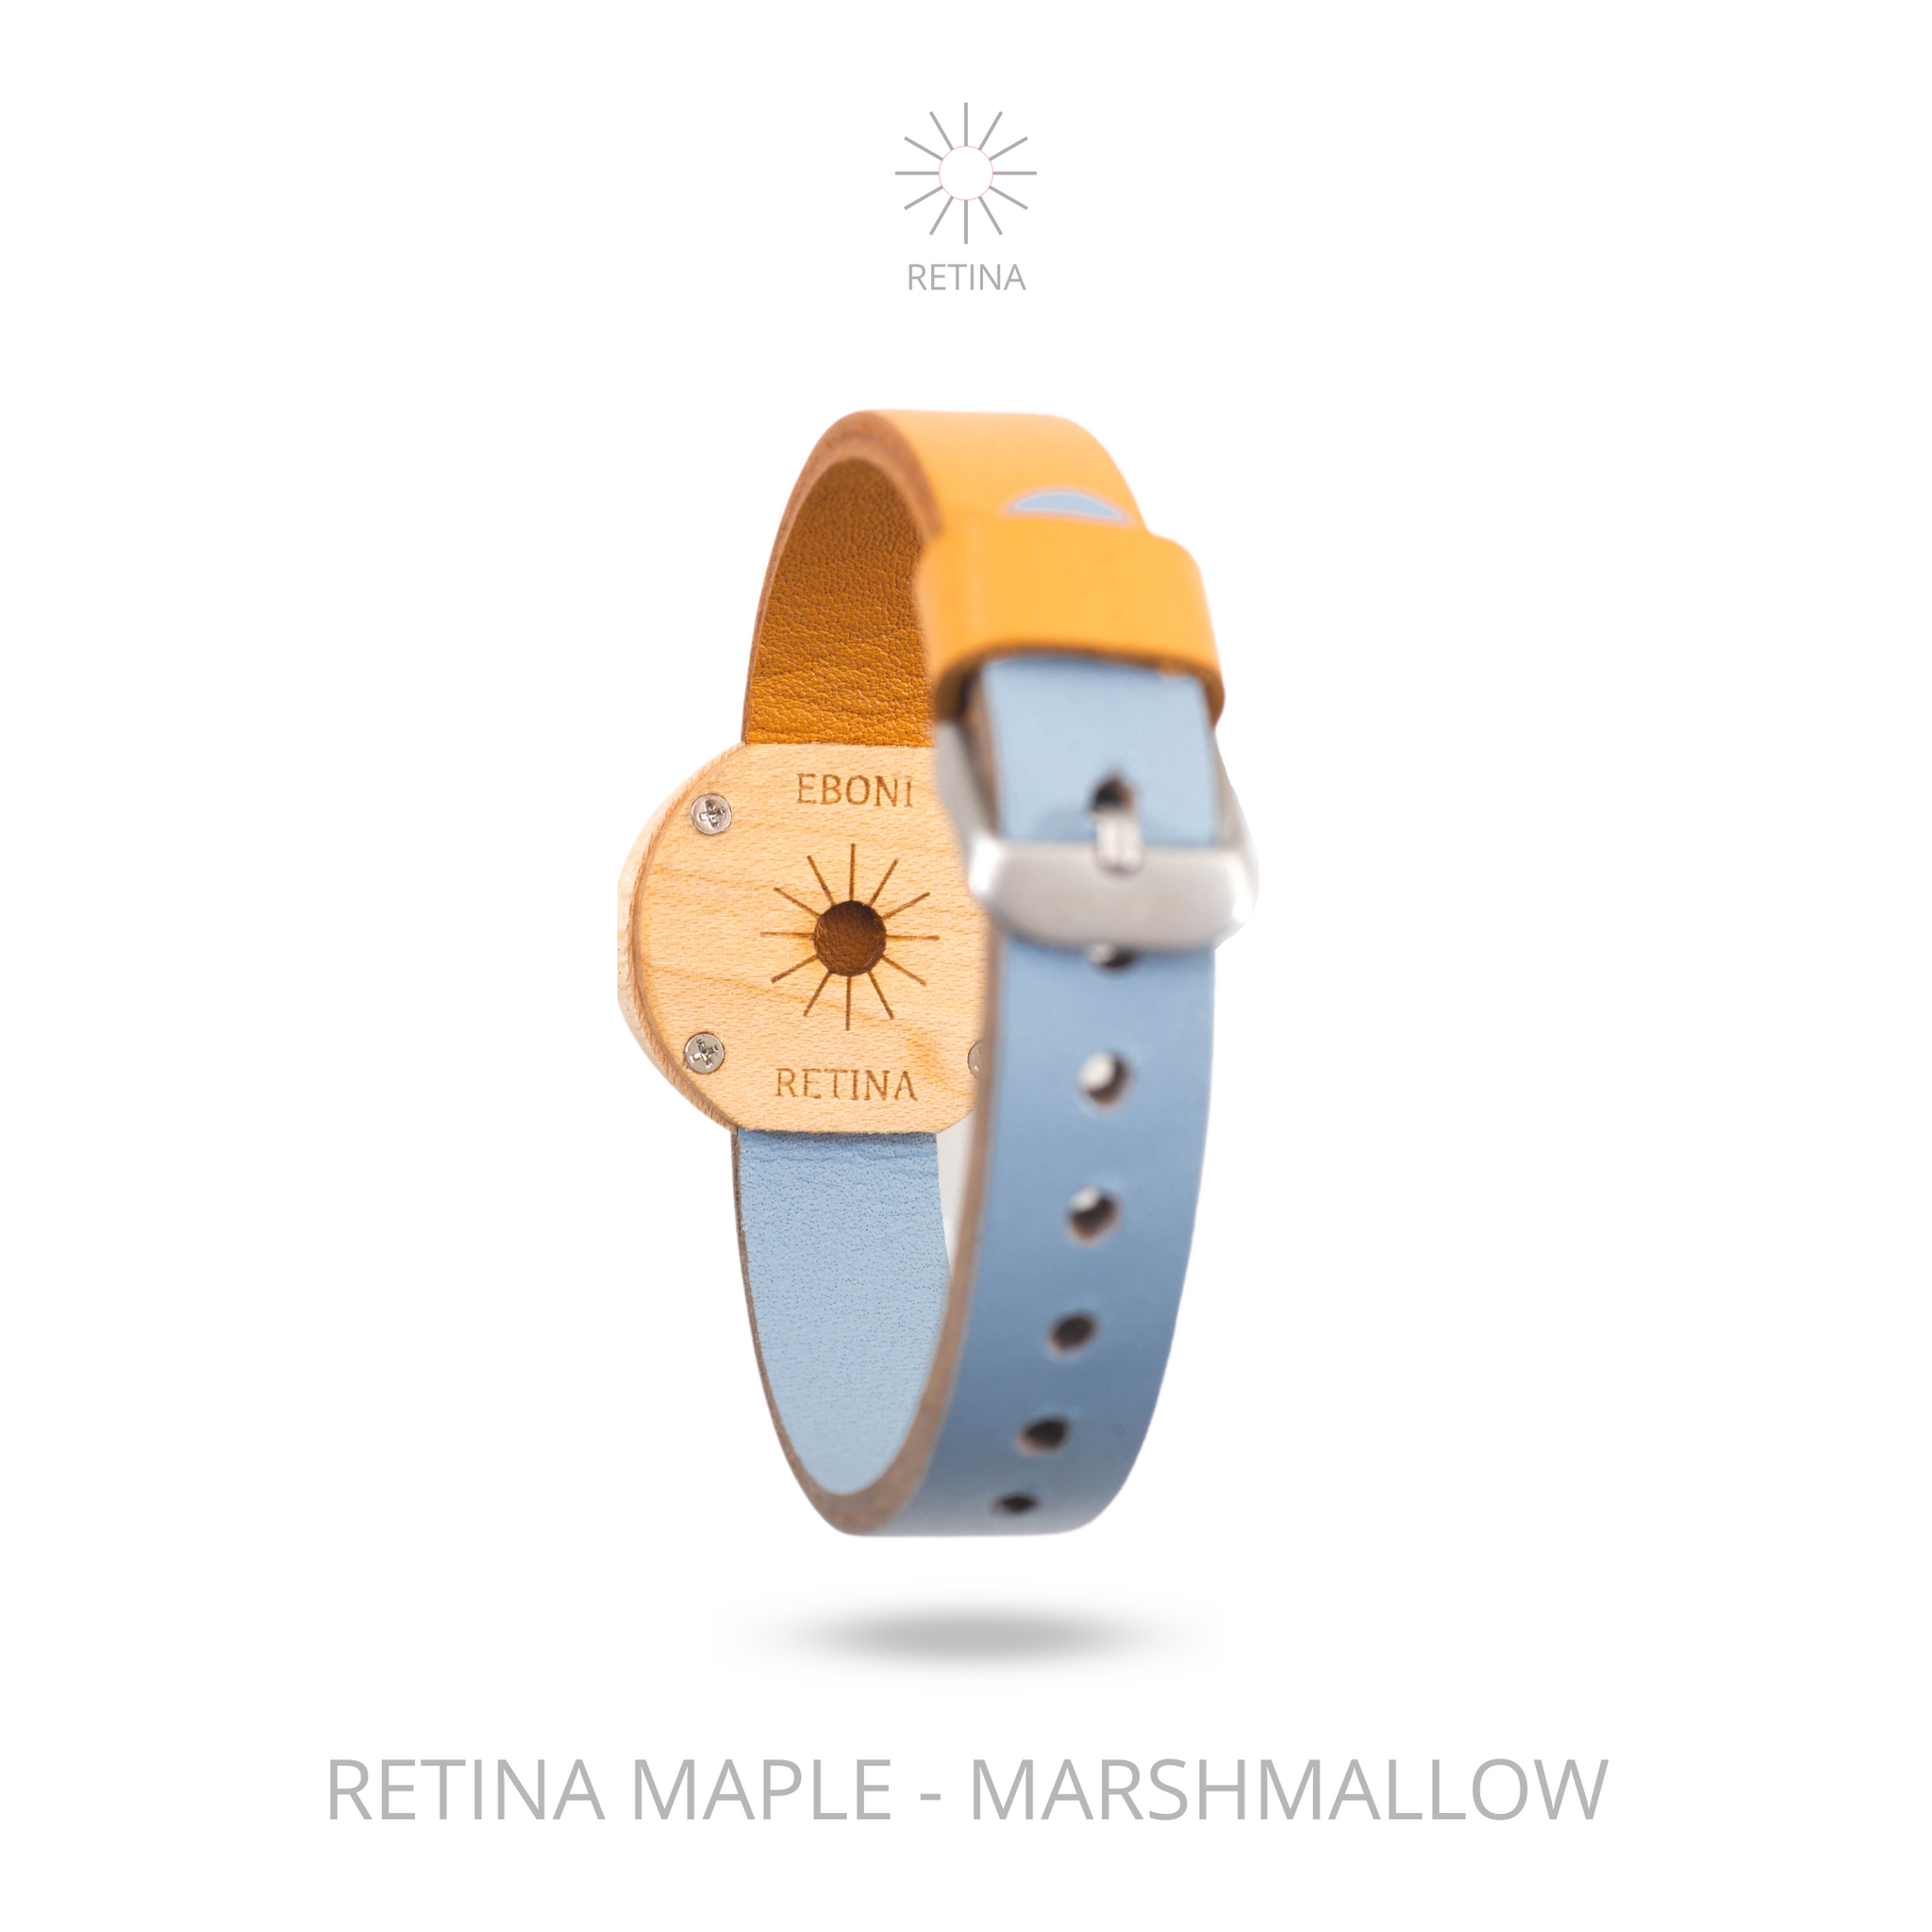 Eboni Retina Maple - Marshmallow